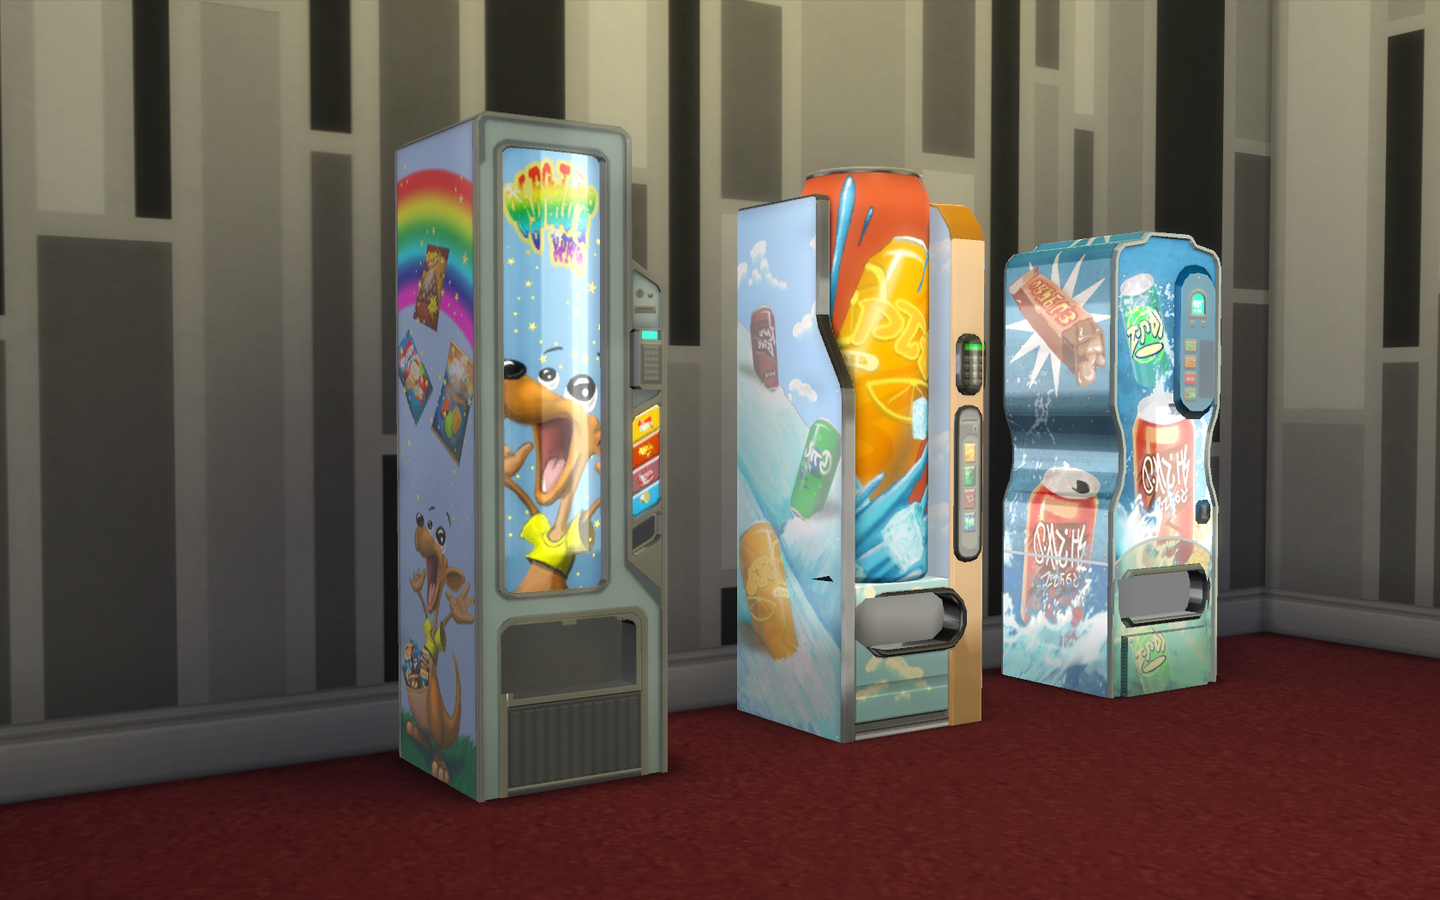 Sims 4 Vending Machine